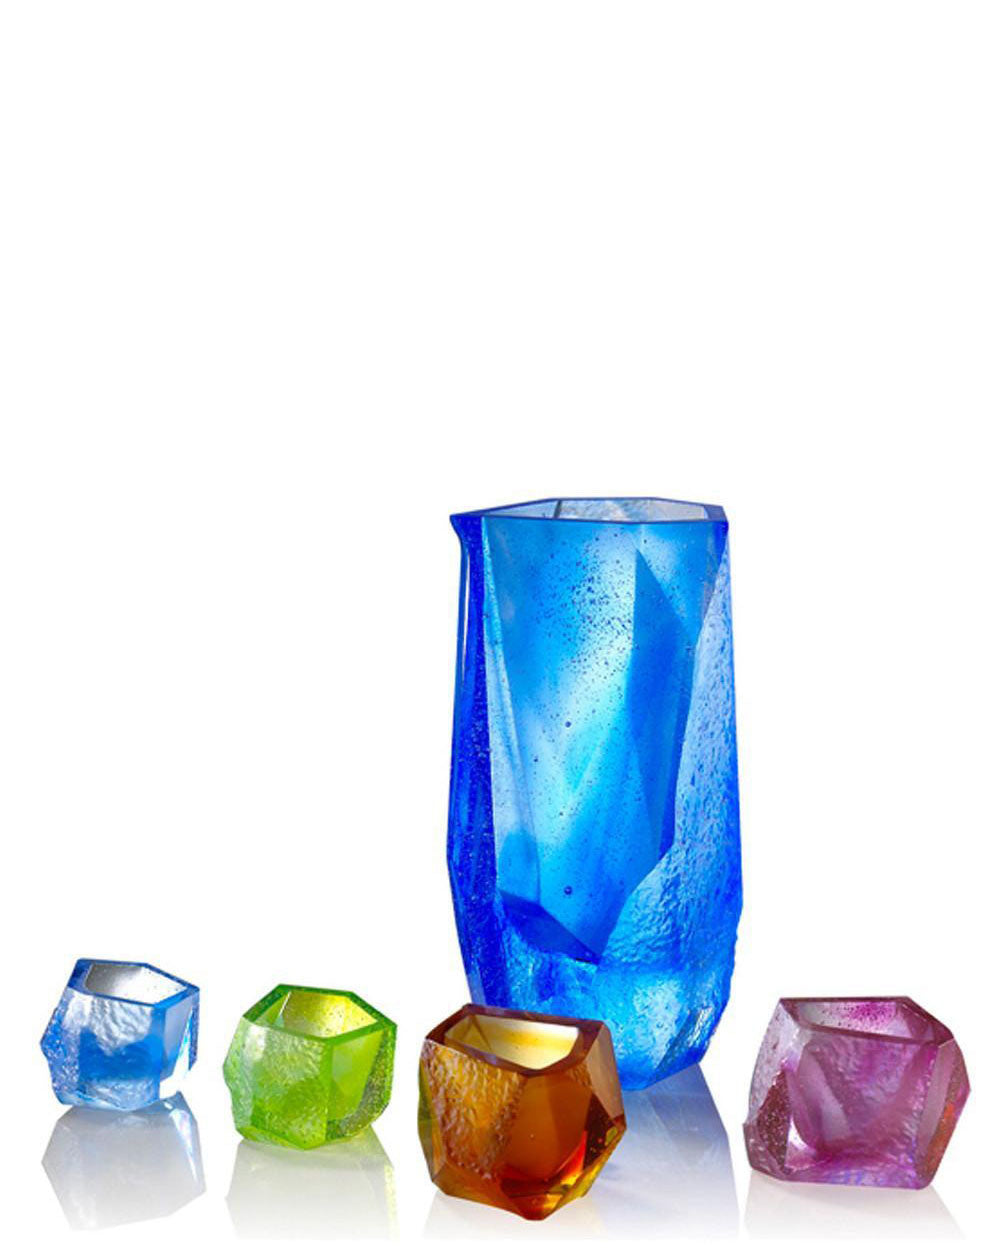 LIULI Crystal Art Crystal Sake Glass and Jar "Our Secret" Set of 5